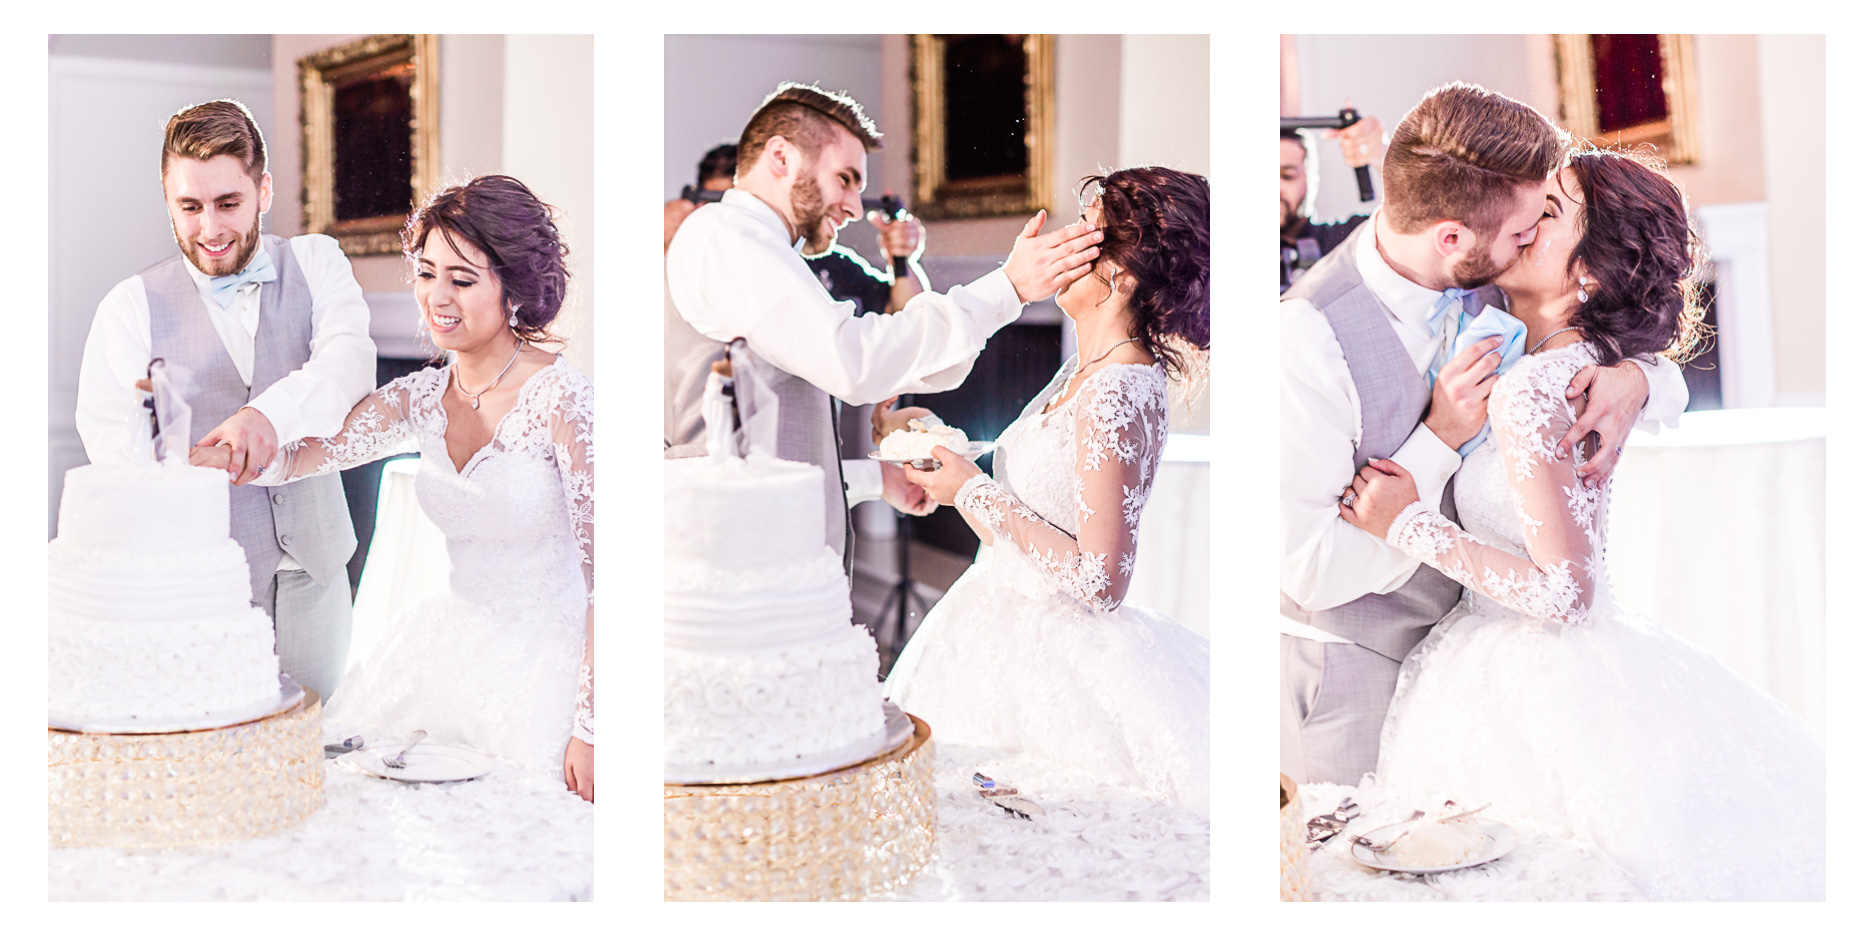 foxchase-manor-wedding-reception-bride-groom-cutting-cake.jpg